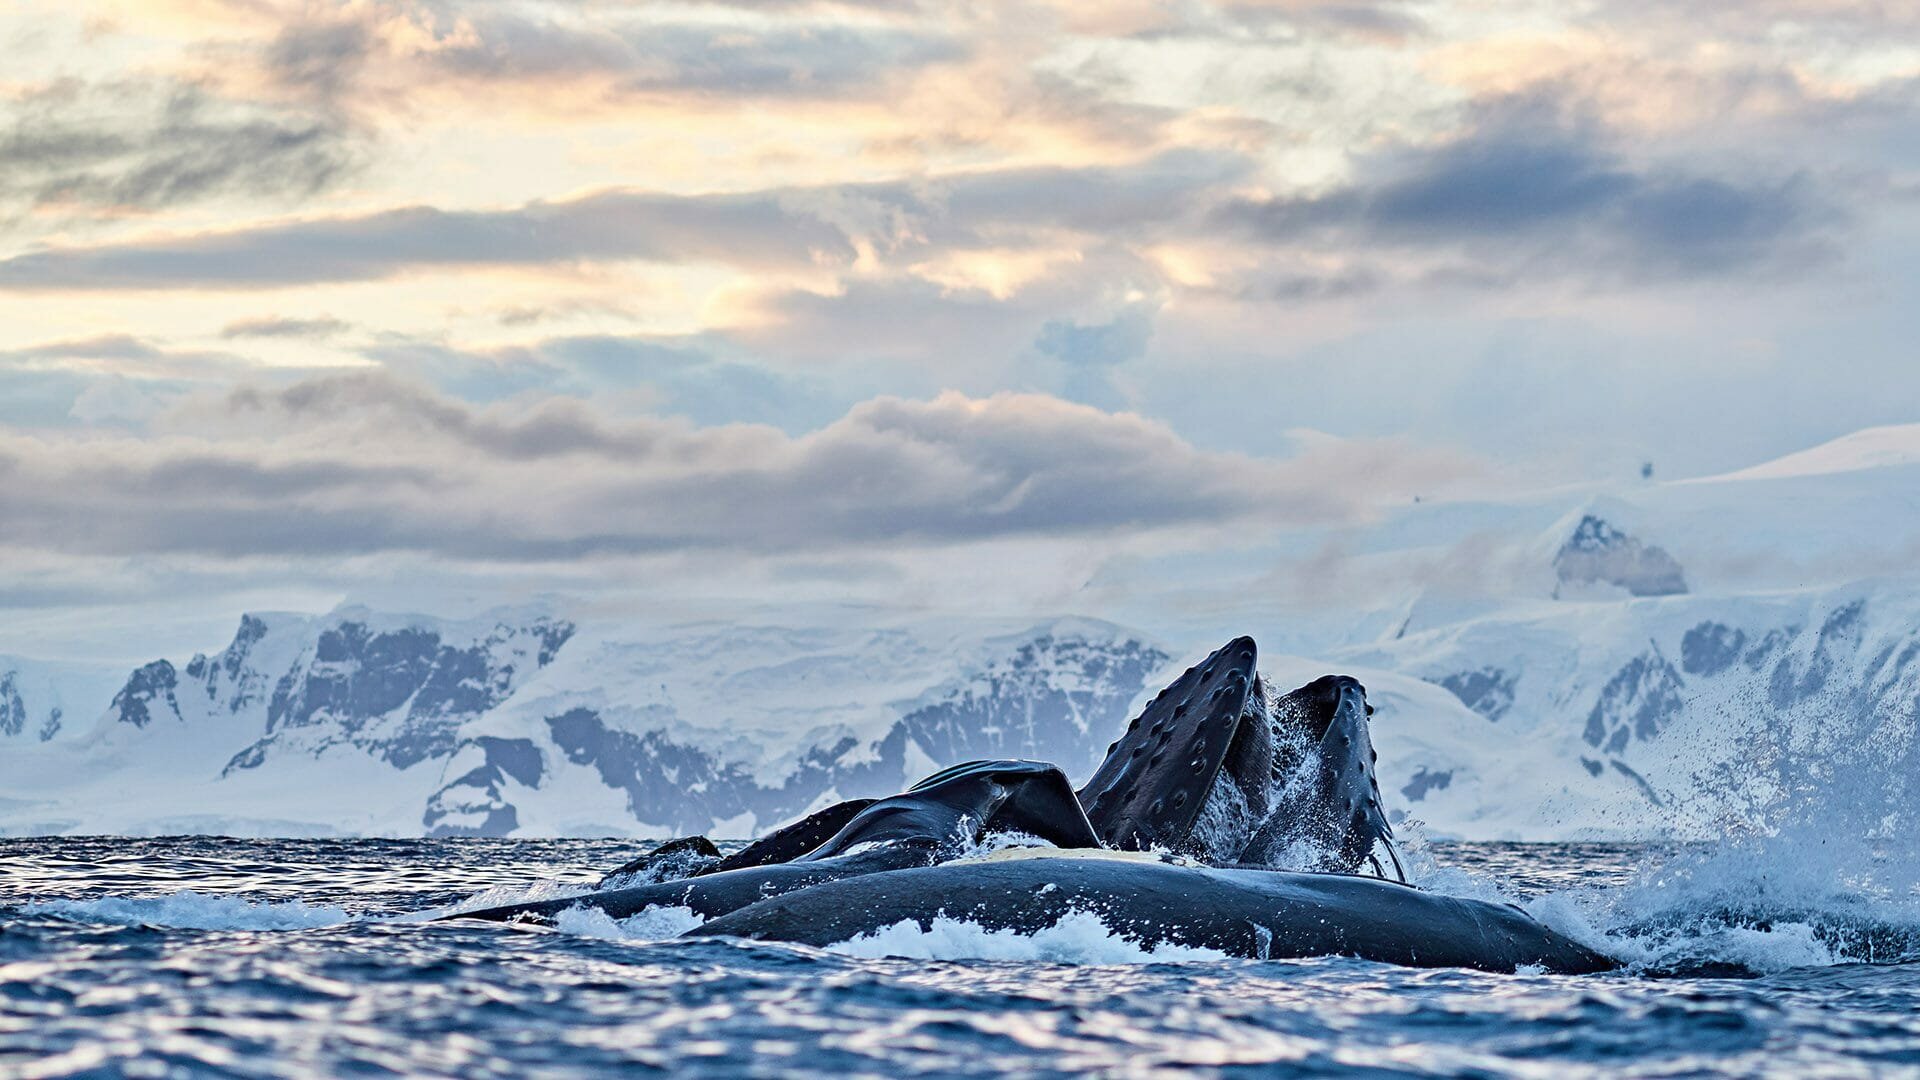 humpback-whale-breaching-antarctica-sunset-mountains-1920x1080.jpg